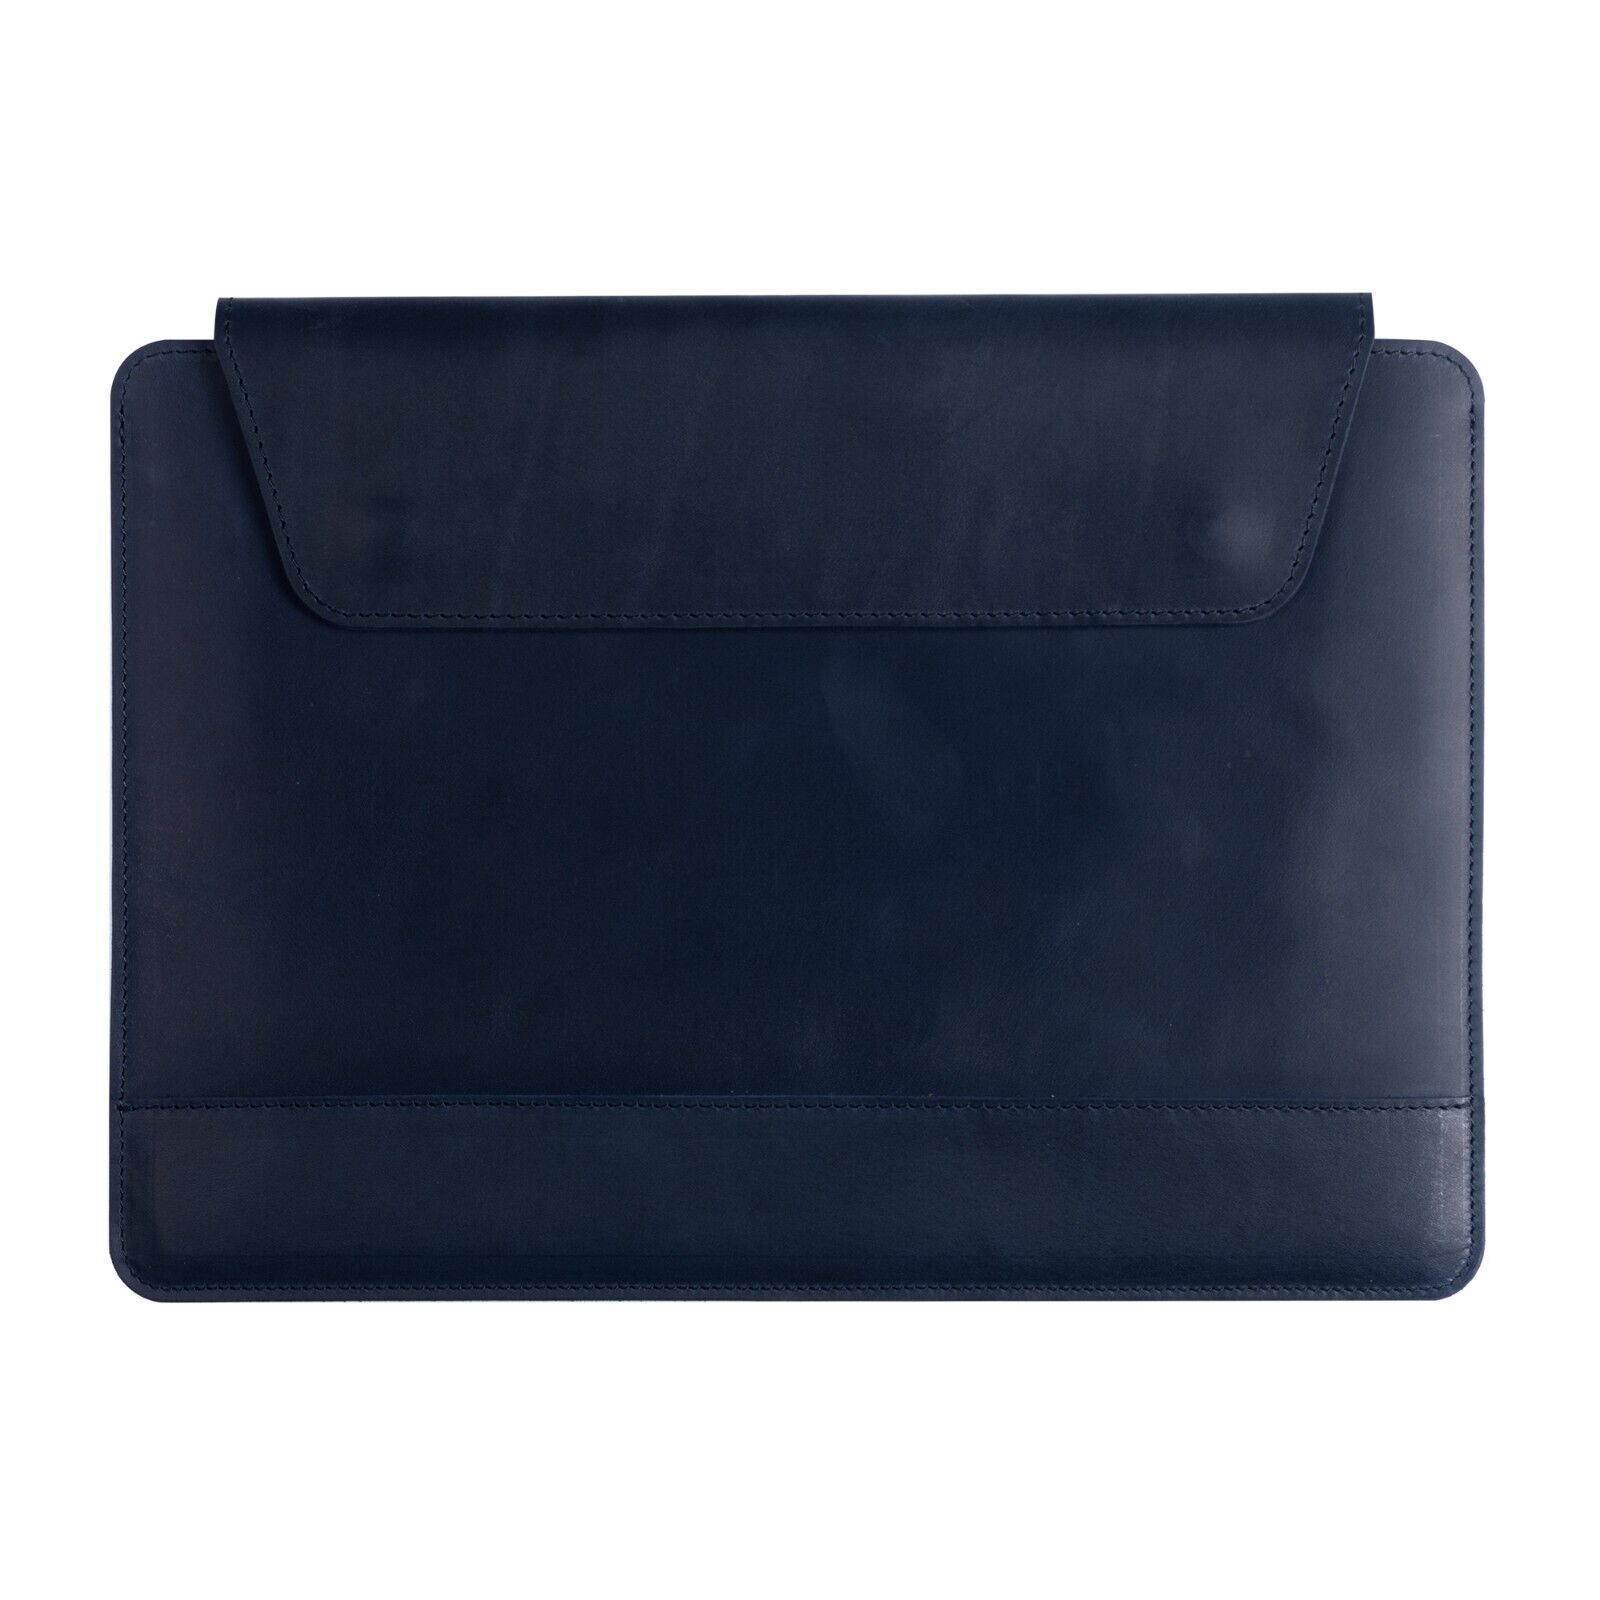 Handmade Genuine Leather macbook sleeve case for macbook air pro 12 13 15 blue